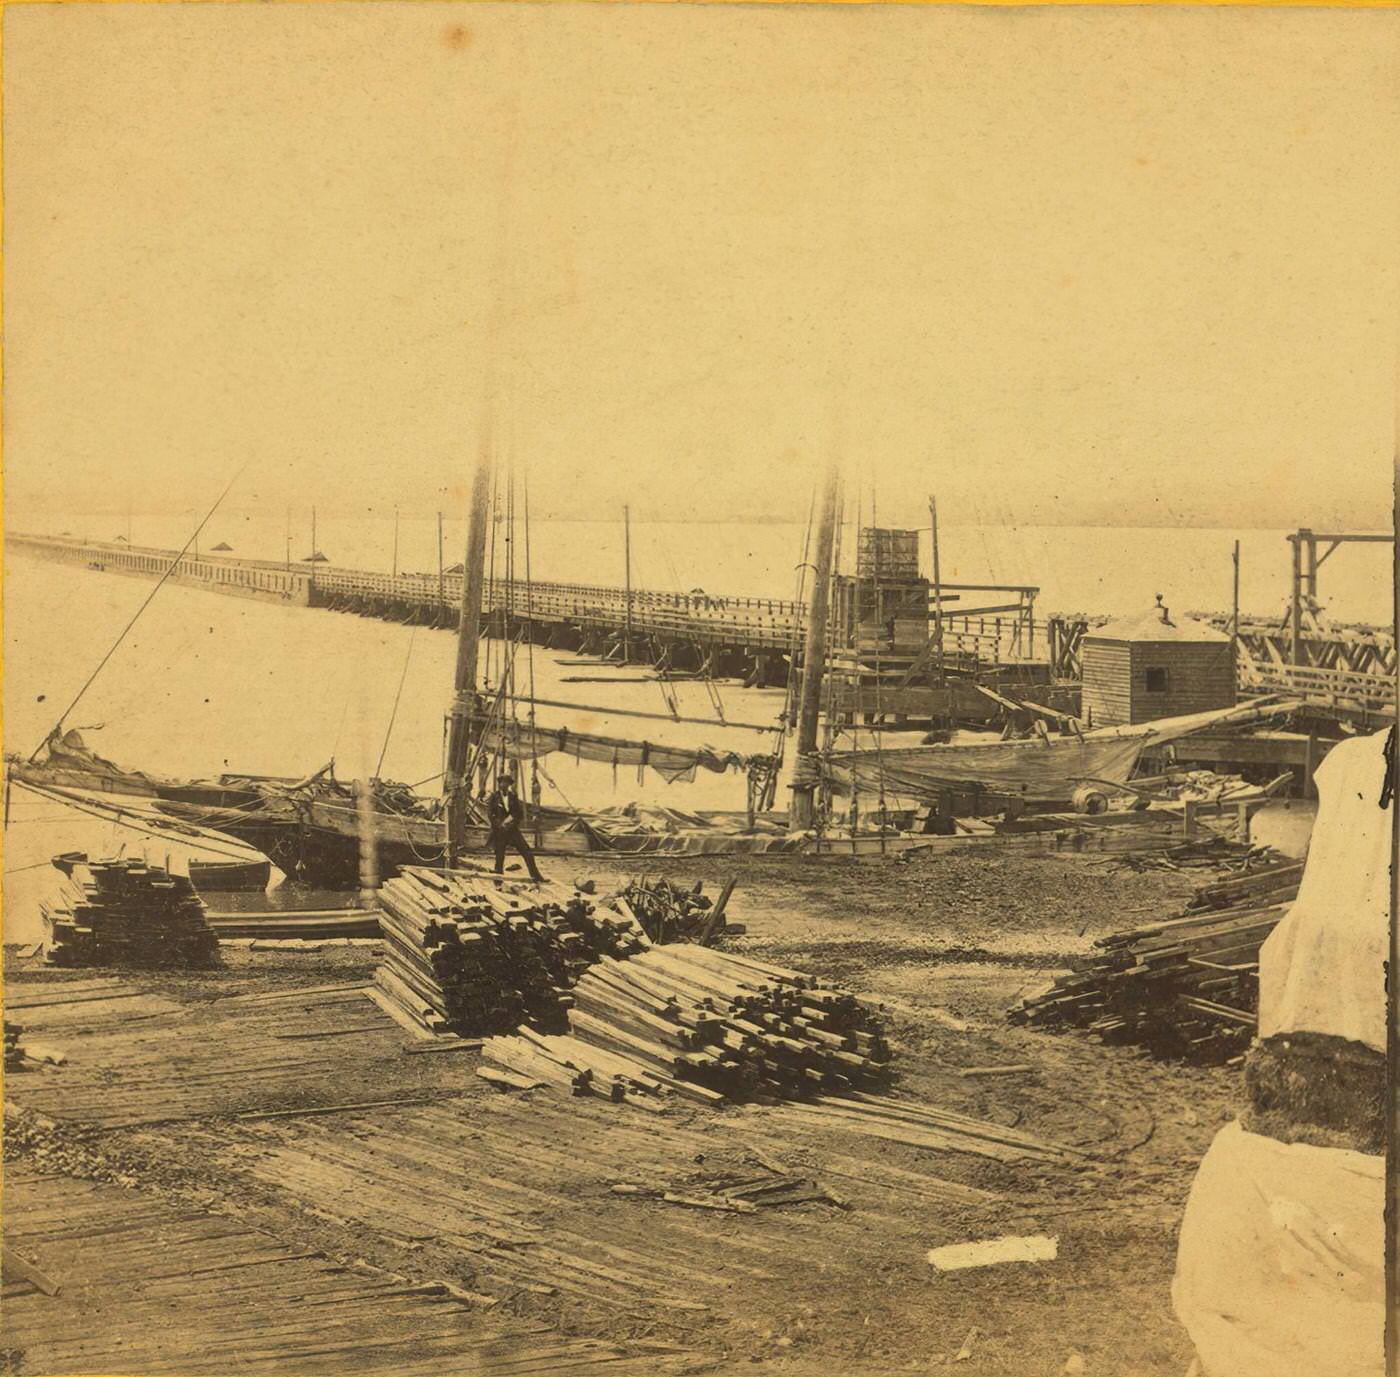 Over the Potomac River at Long Bridge, Washington, D.C., 1860s